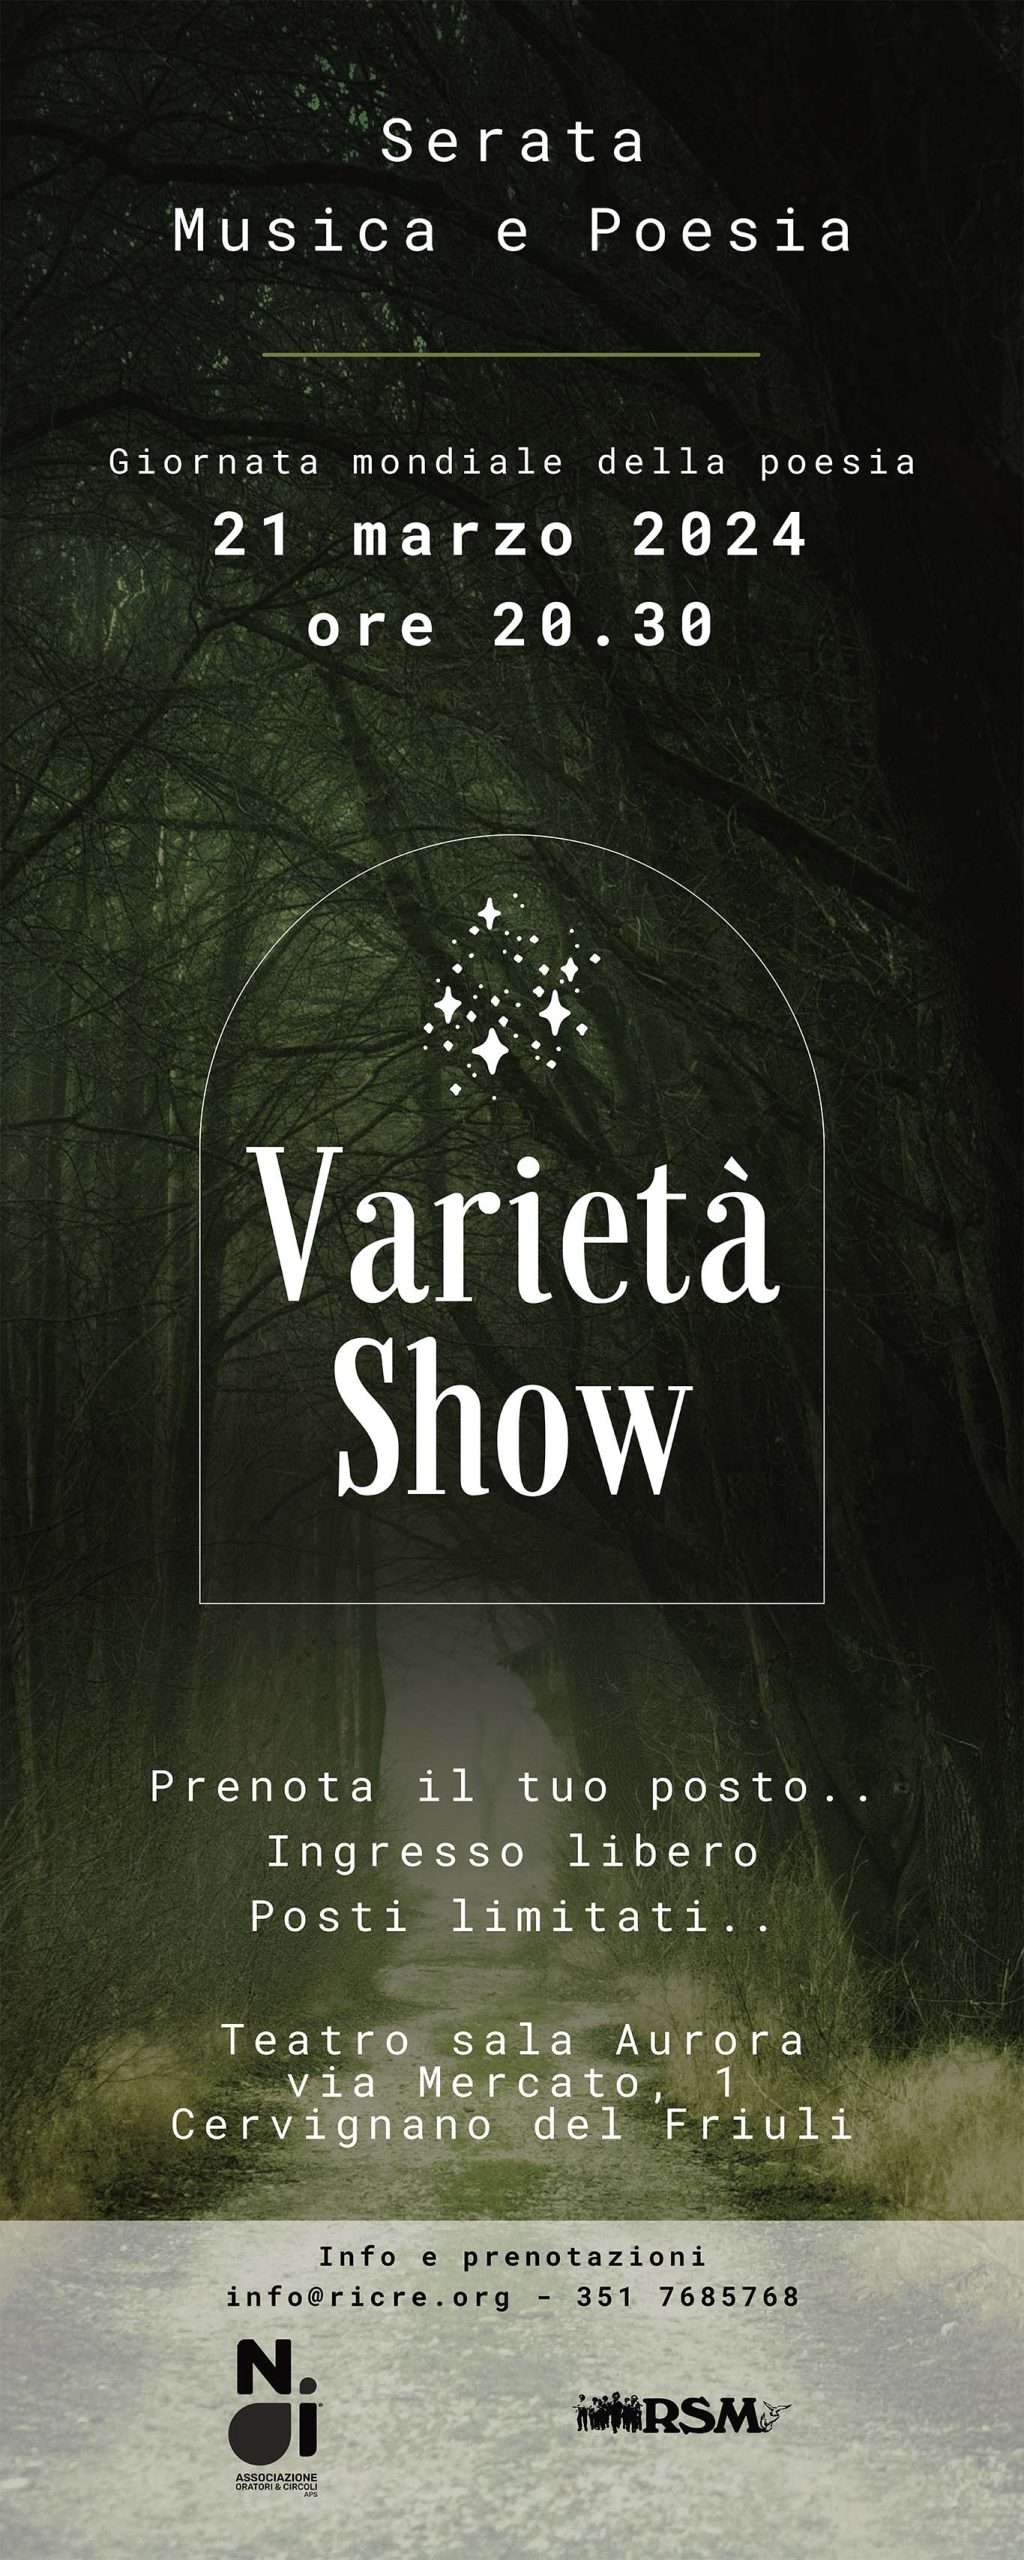 Varietà show